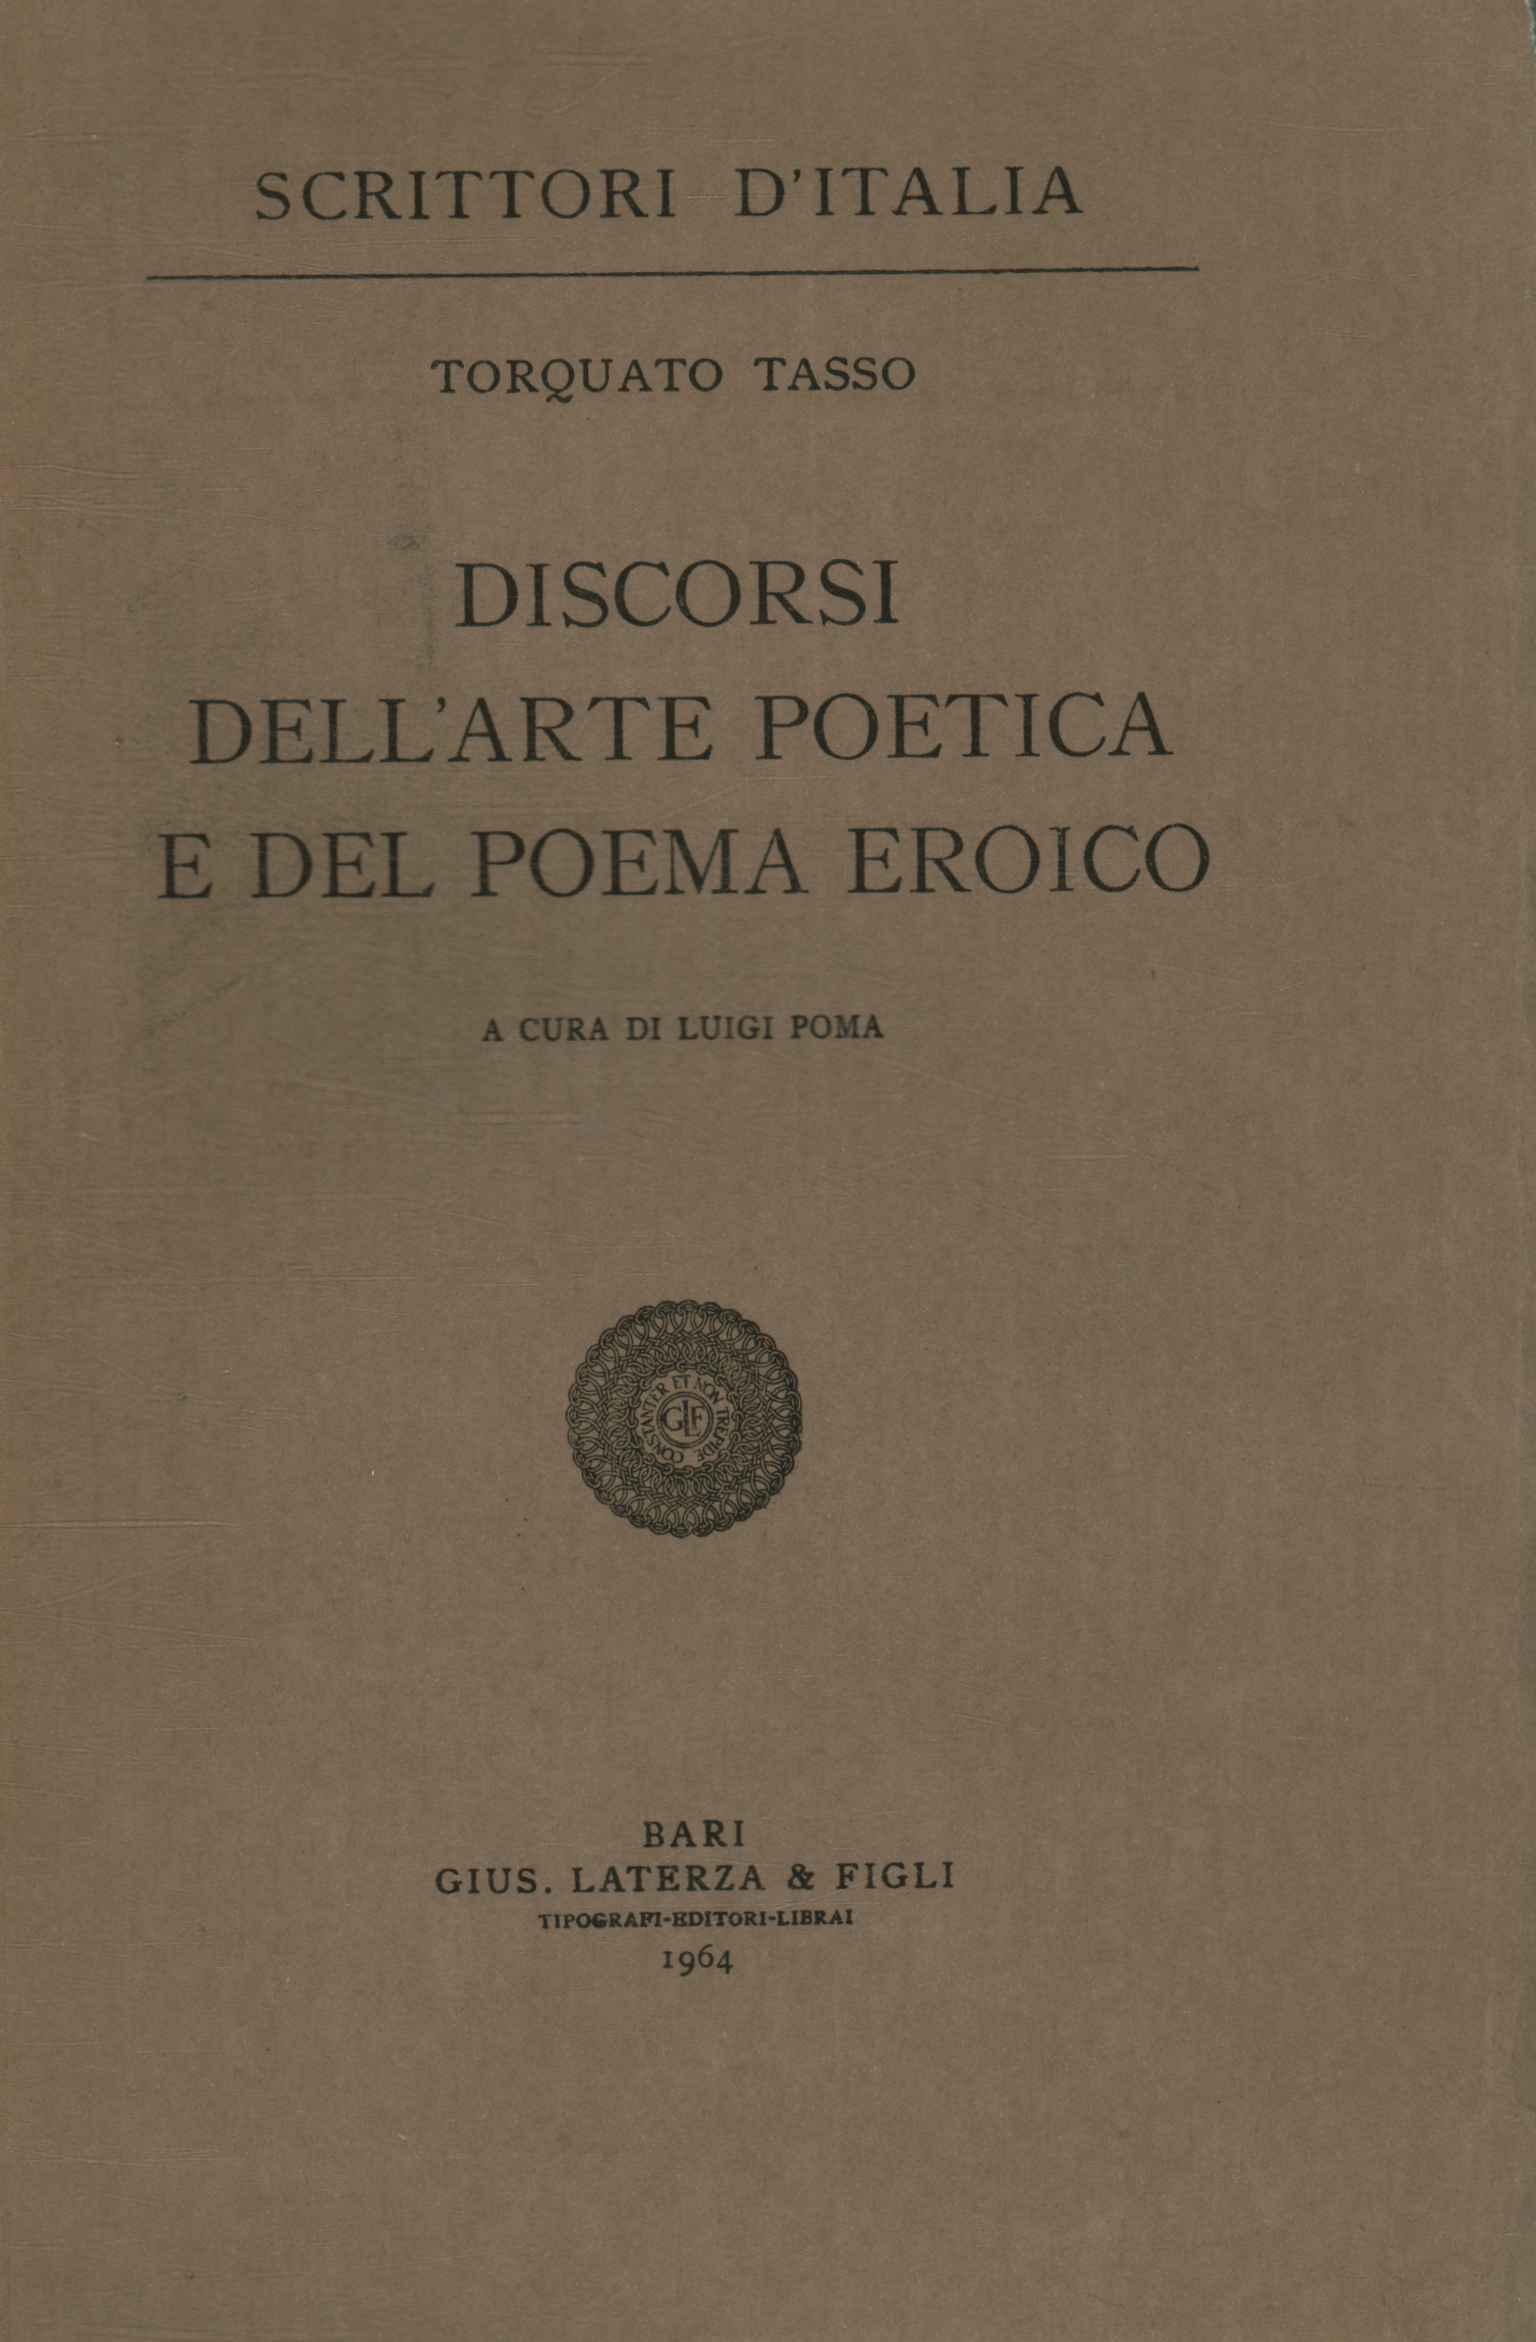 Discourses on poetic art and de